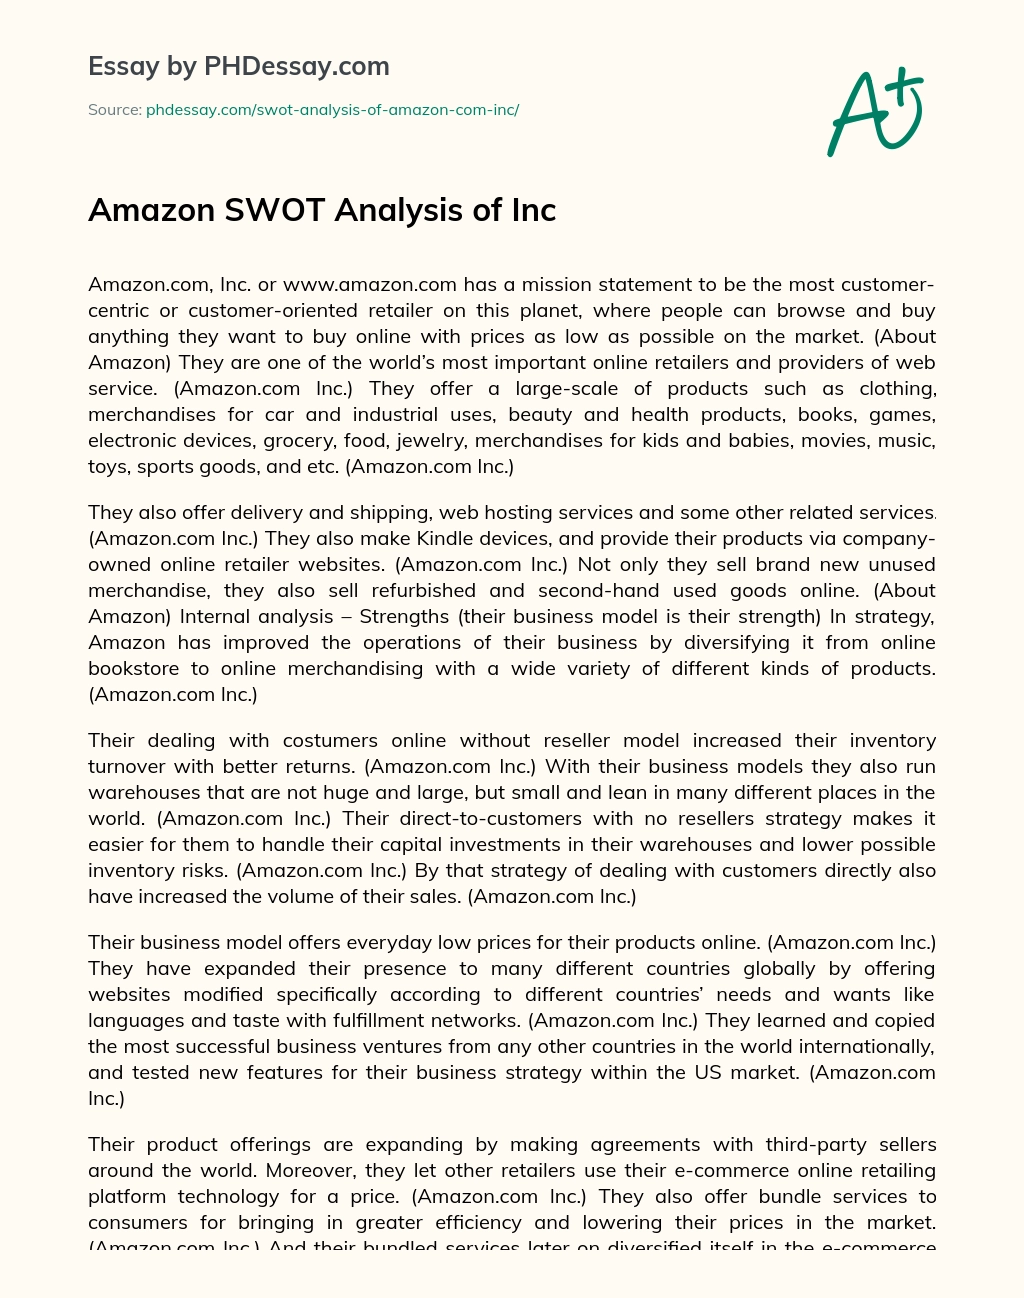 Amazon SWOT Analysis of Inc essay